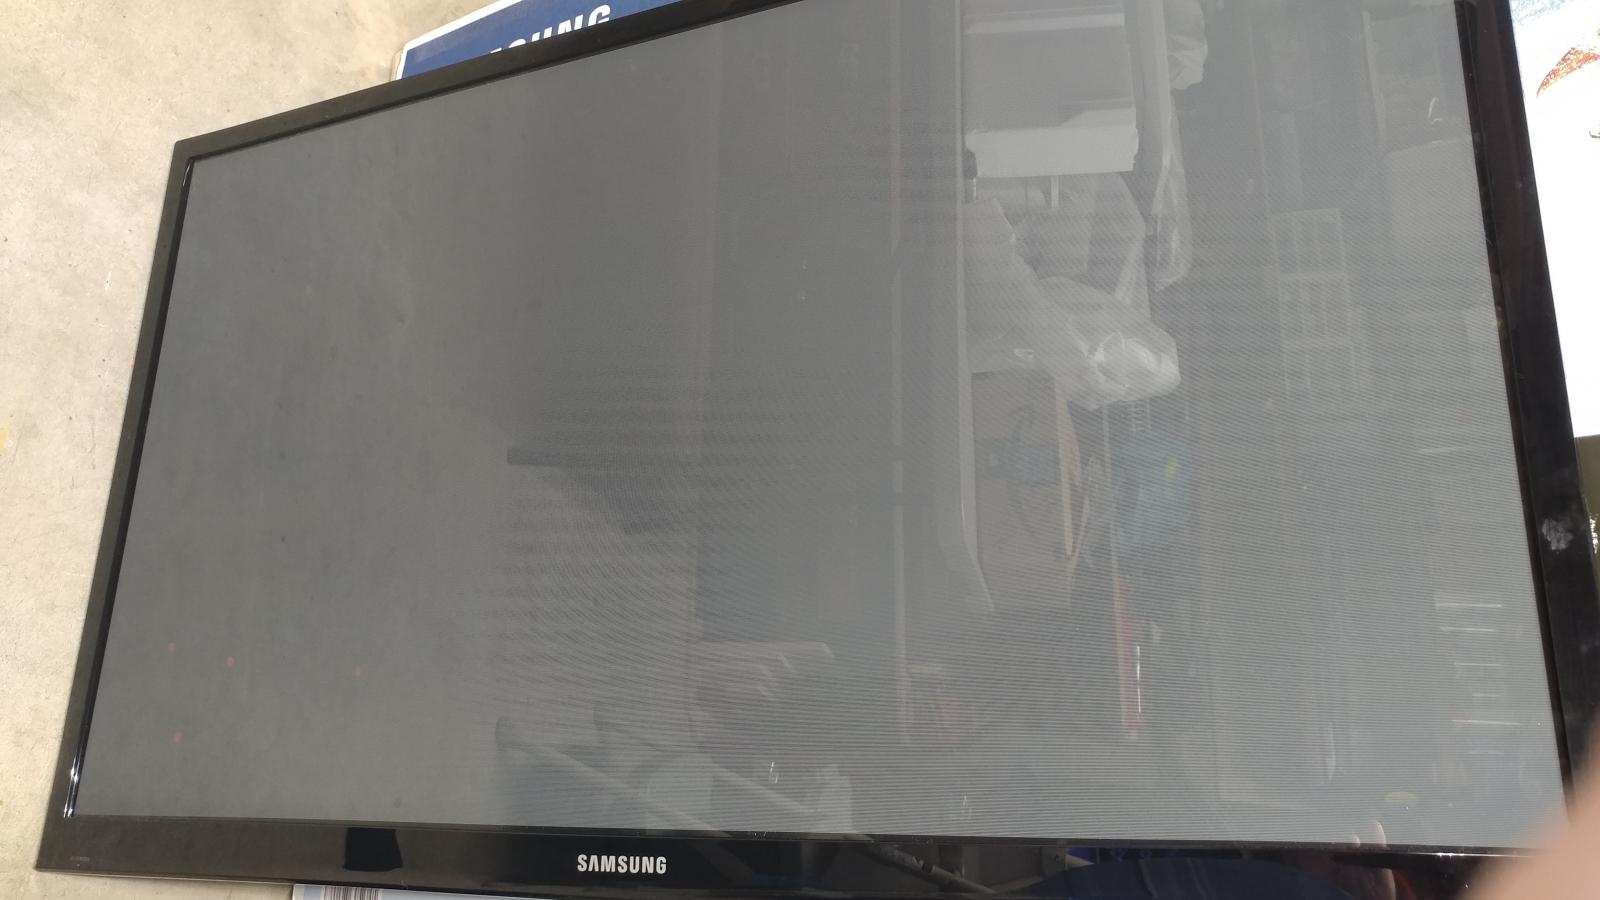 For sale Samsung  51-Inch 720p 600 Hz Plasma HDTV- Model PN51D450A1F, Black, 2012 version